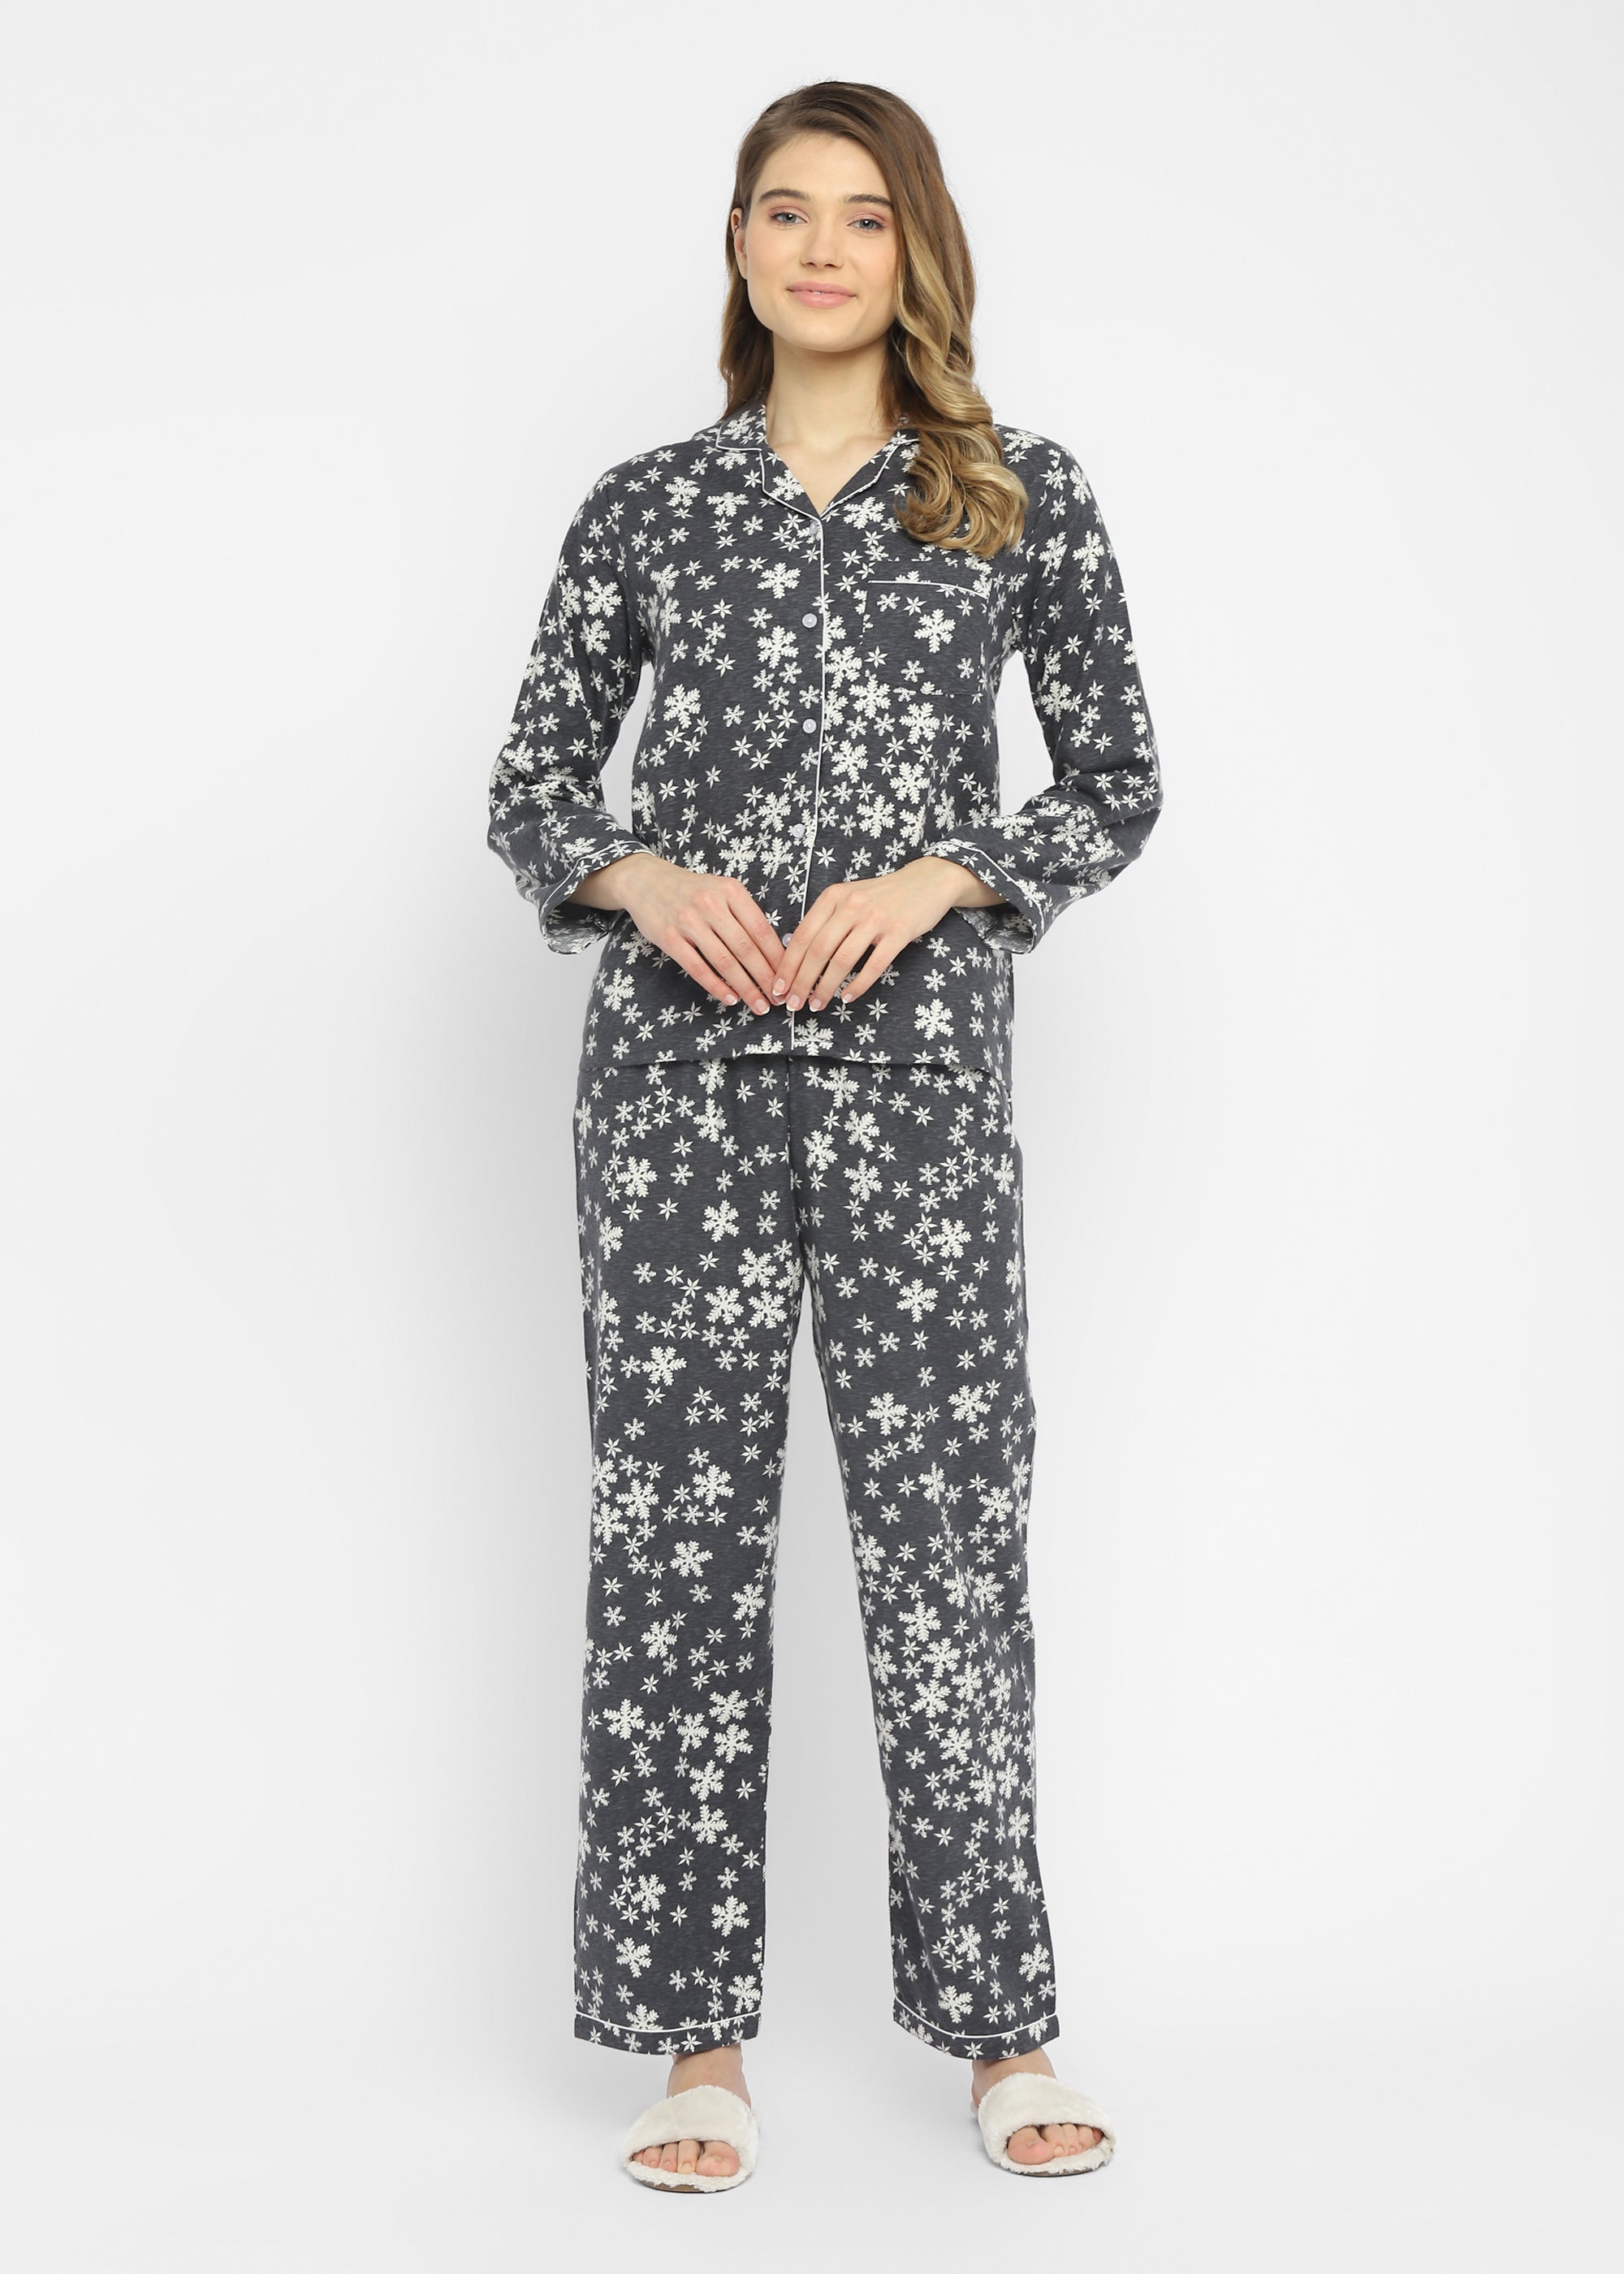 Snowflake Print Long Sleeve Women's Night Suit - Shopbloom